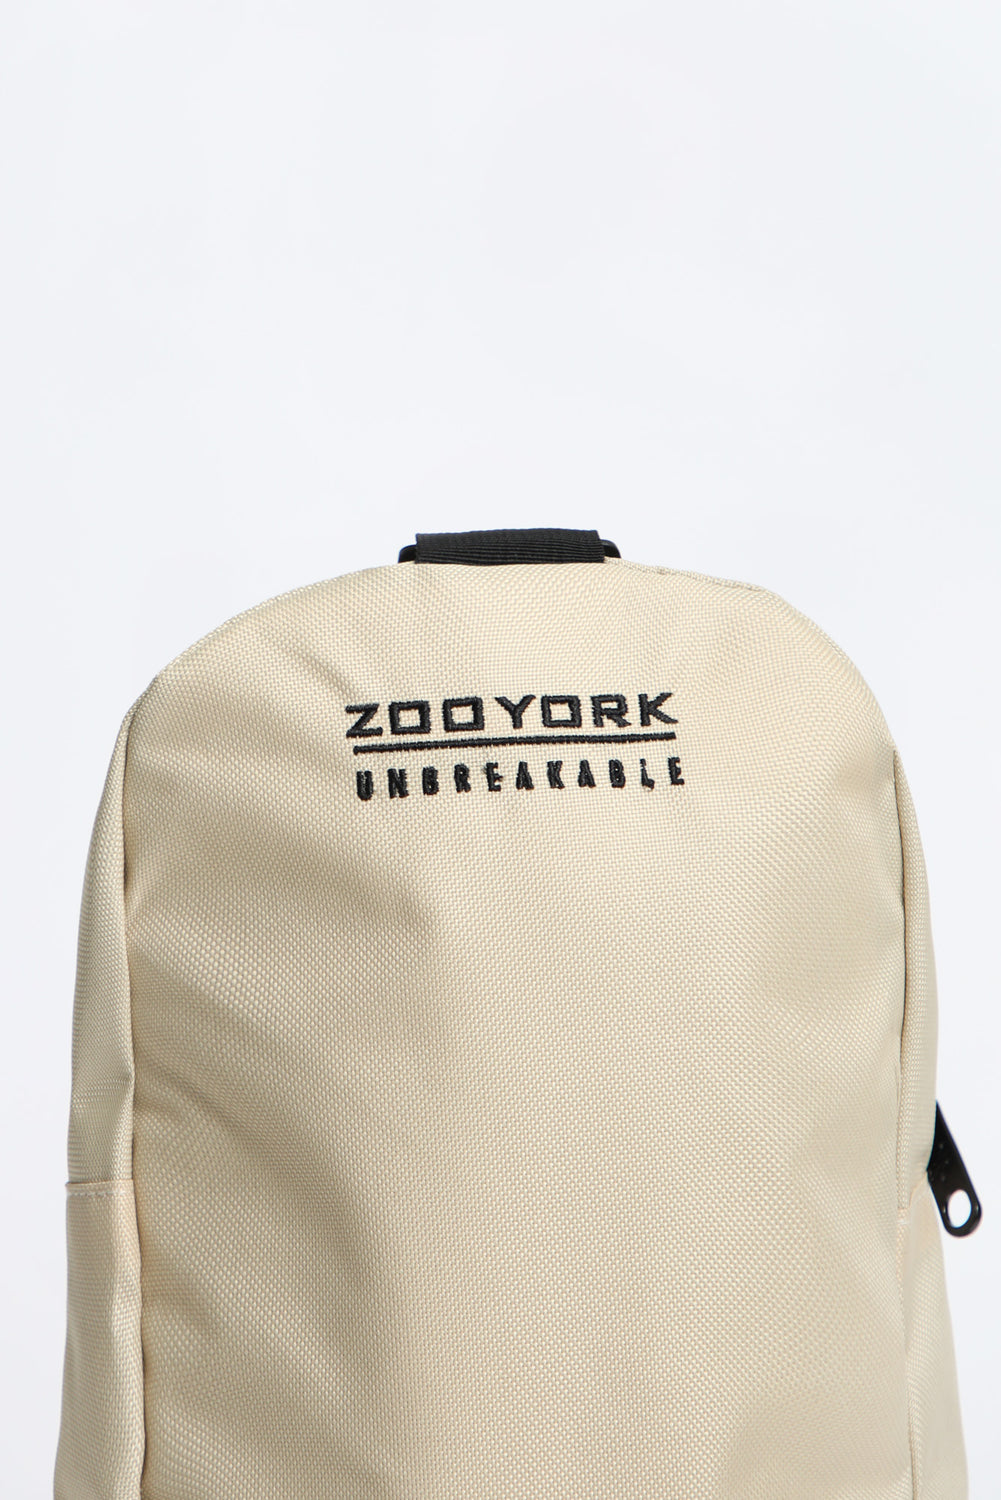 Zoo York Crossbody Shoulder Bag Zoo York Crossbody Shoulder Bag